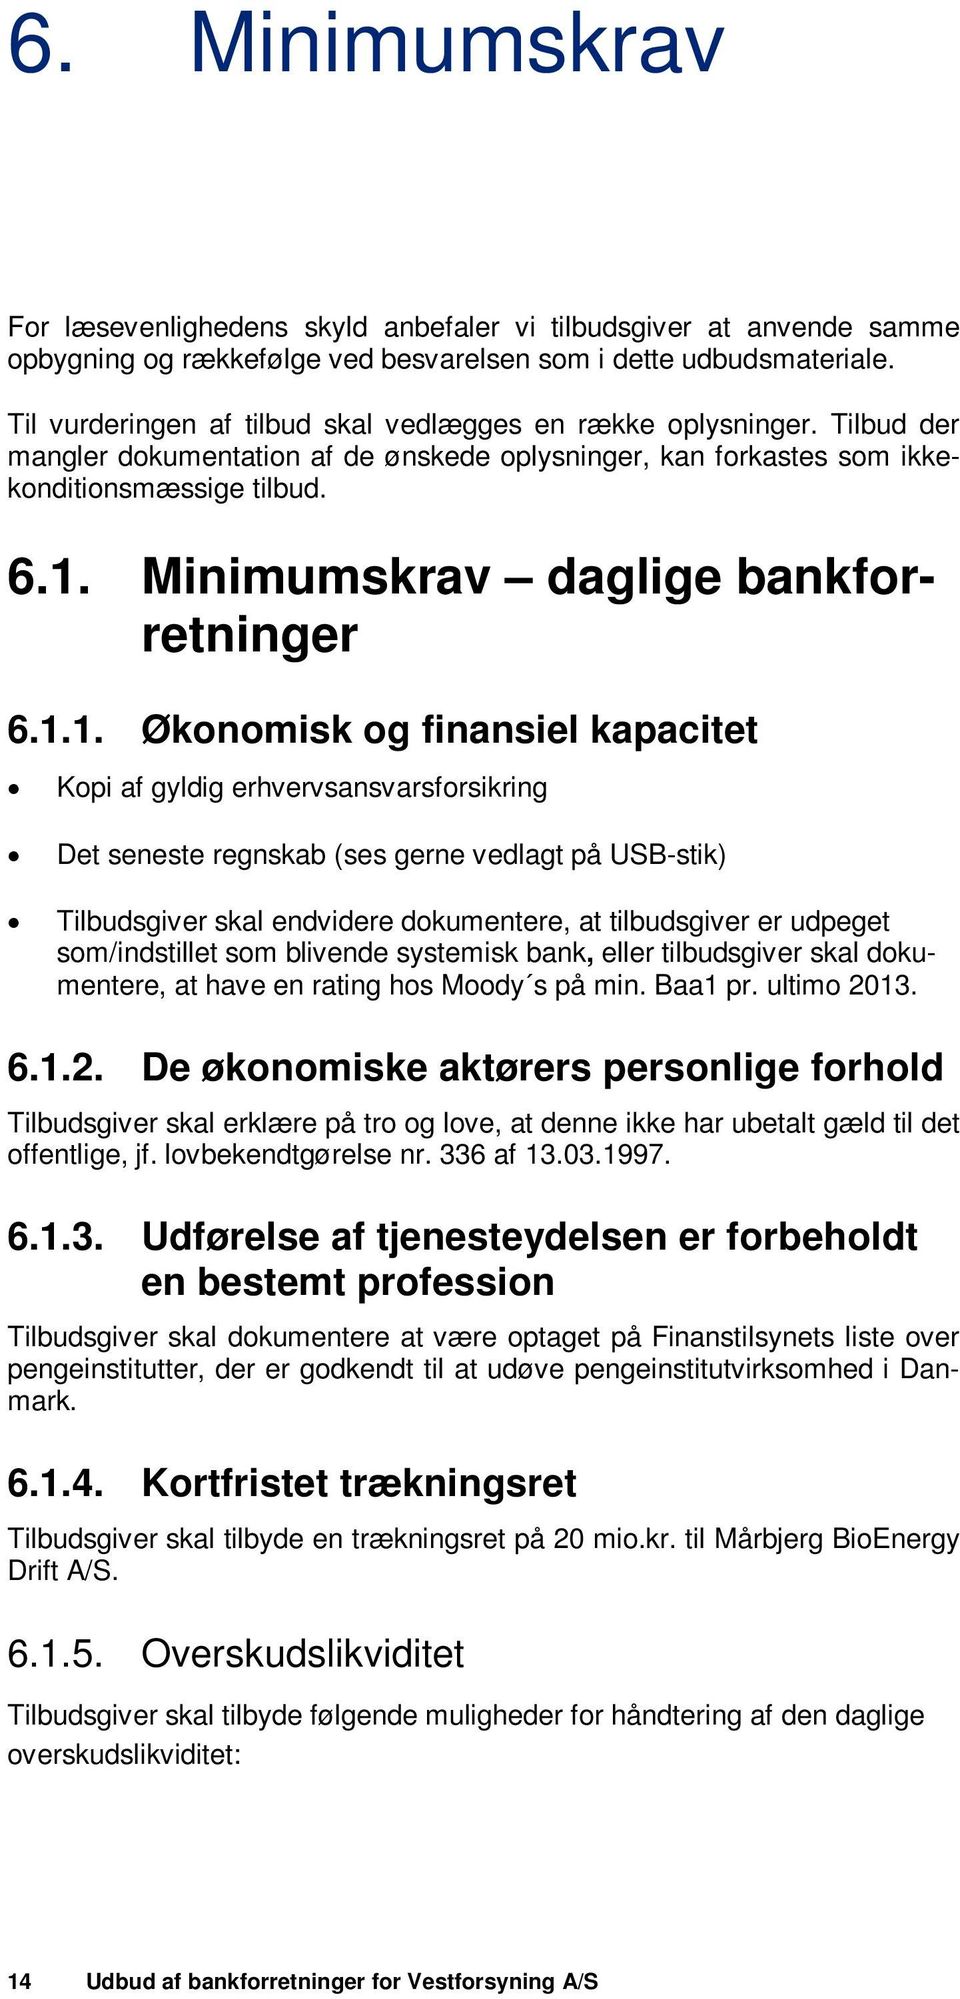 Minimumskrav daglige bankforretninger 6.1.